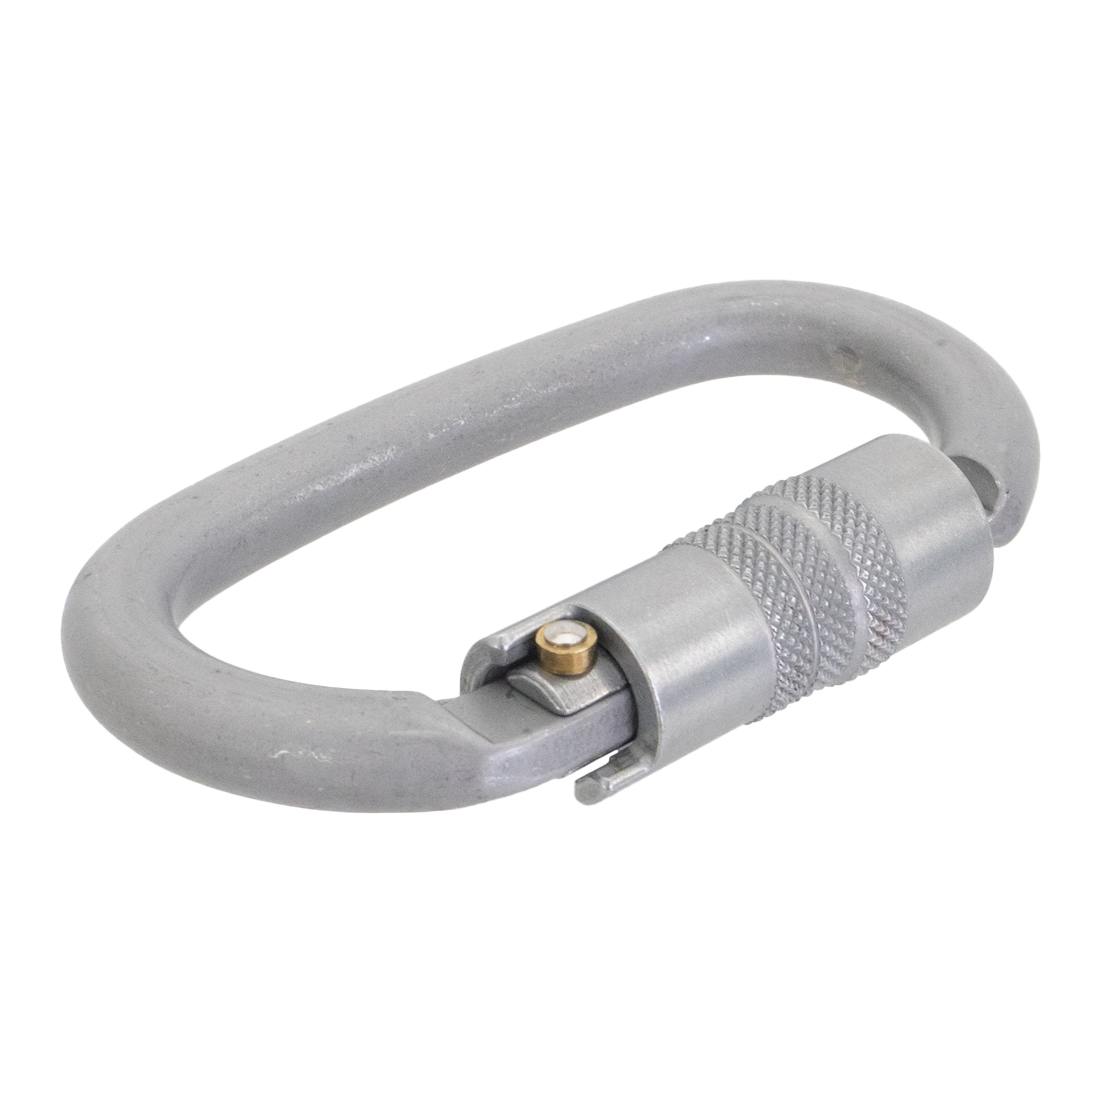 KONG Carbon Carabiner - Ovalone Twist Lock ANSI